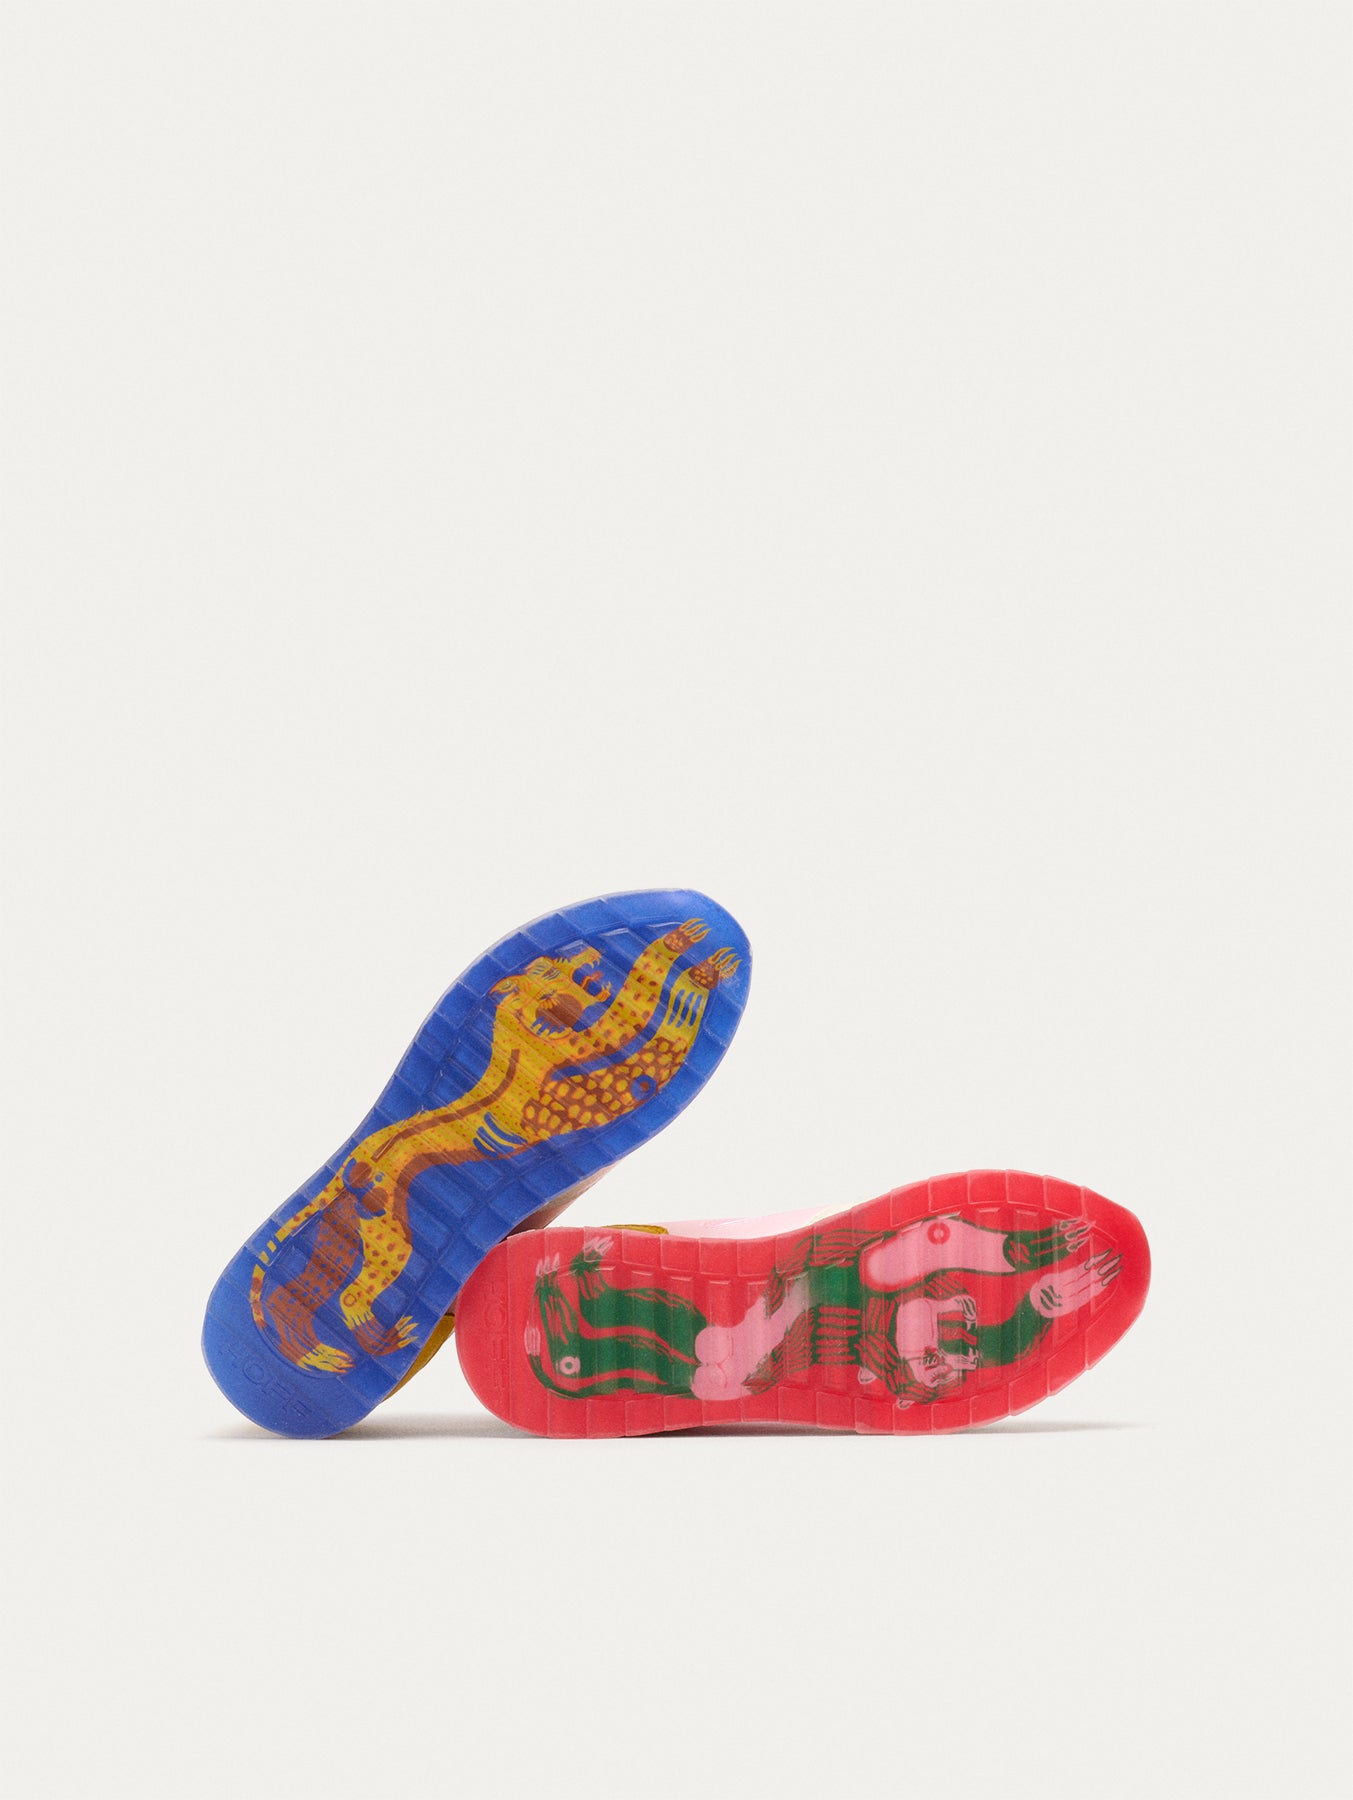 Conker Boutique Hoff Art Trainers showing odd colour soles